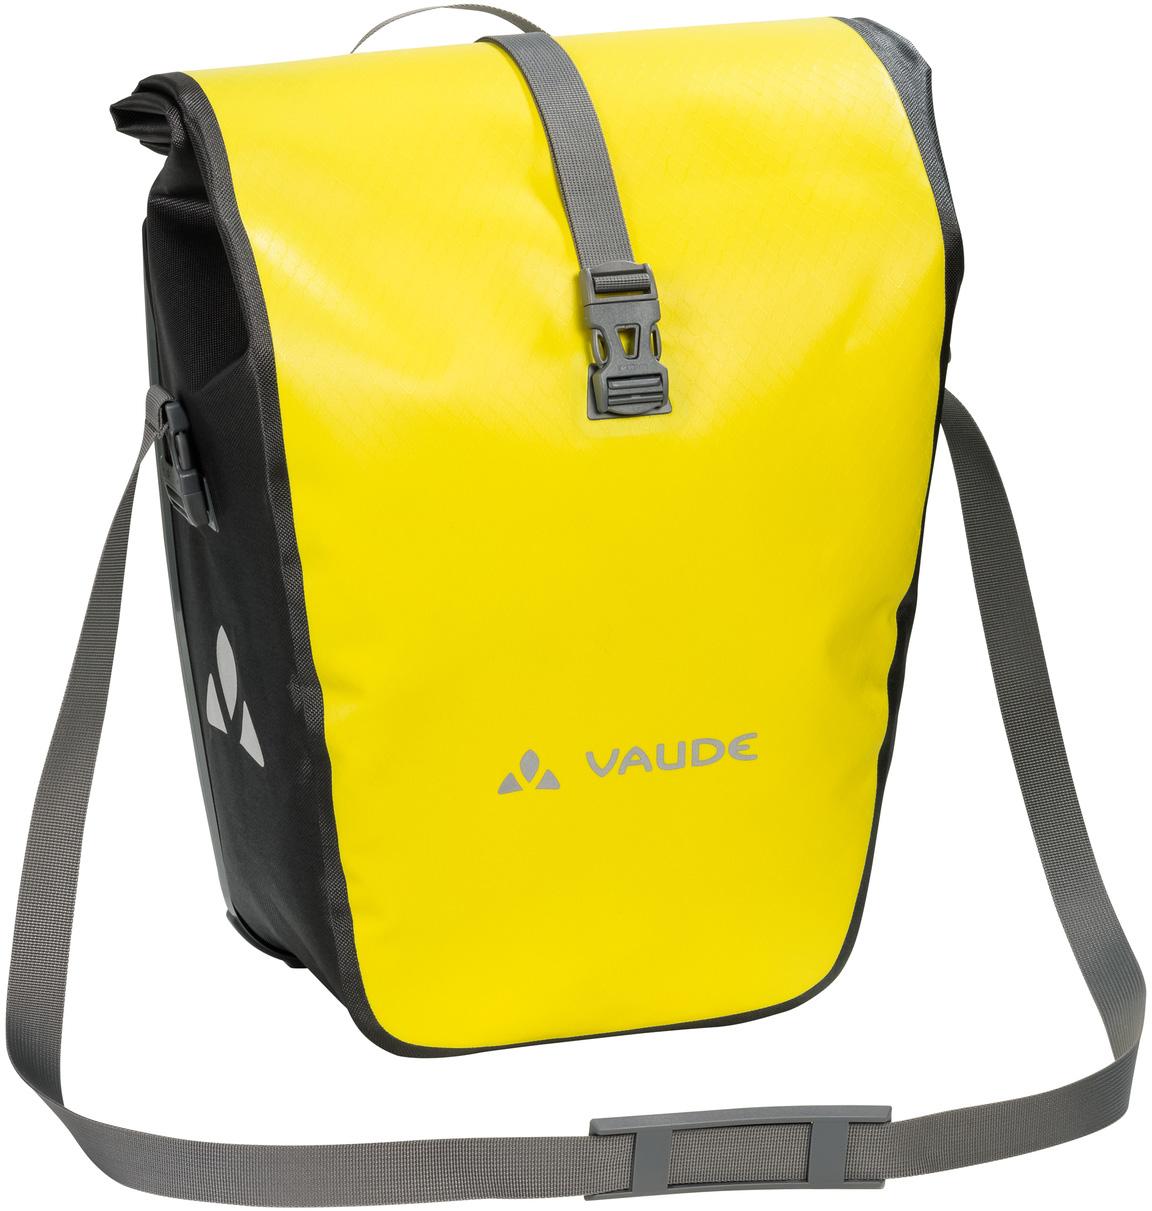 Vaude Aqua Rear Pannier Bags (pair) - Canary Yellow